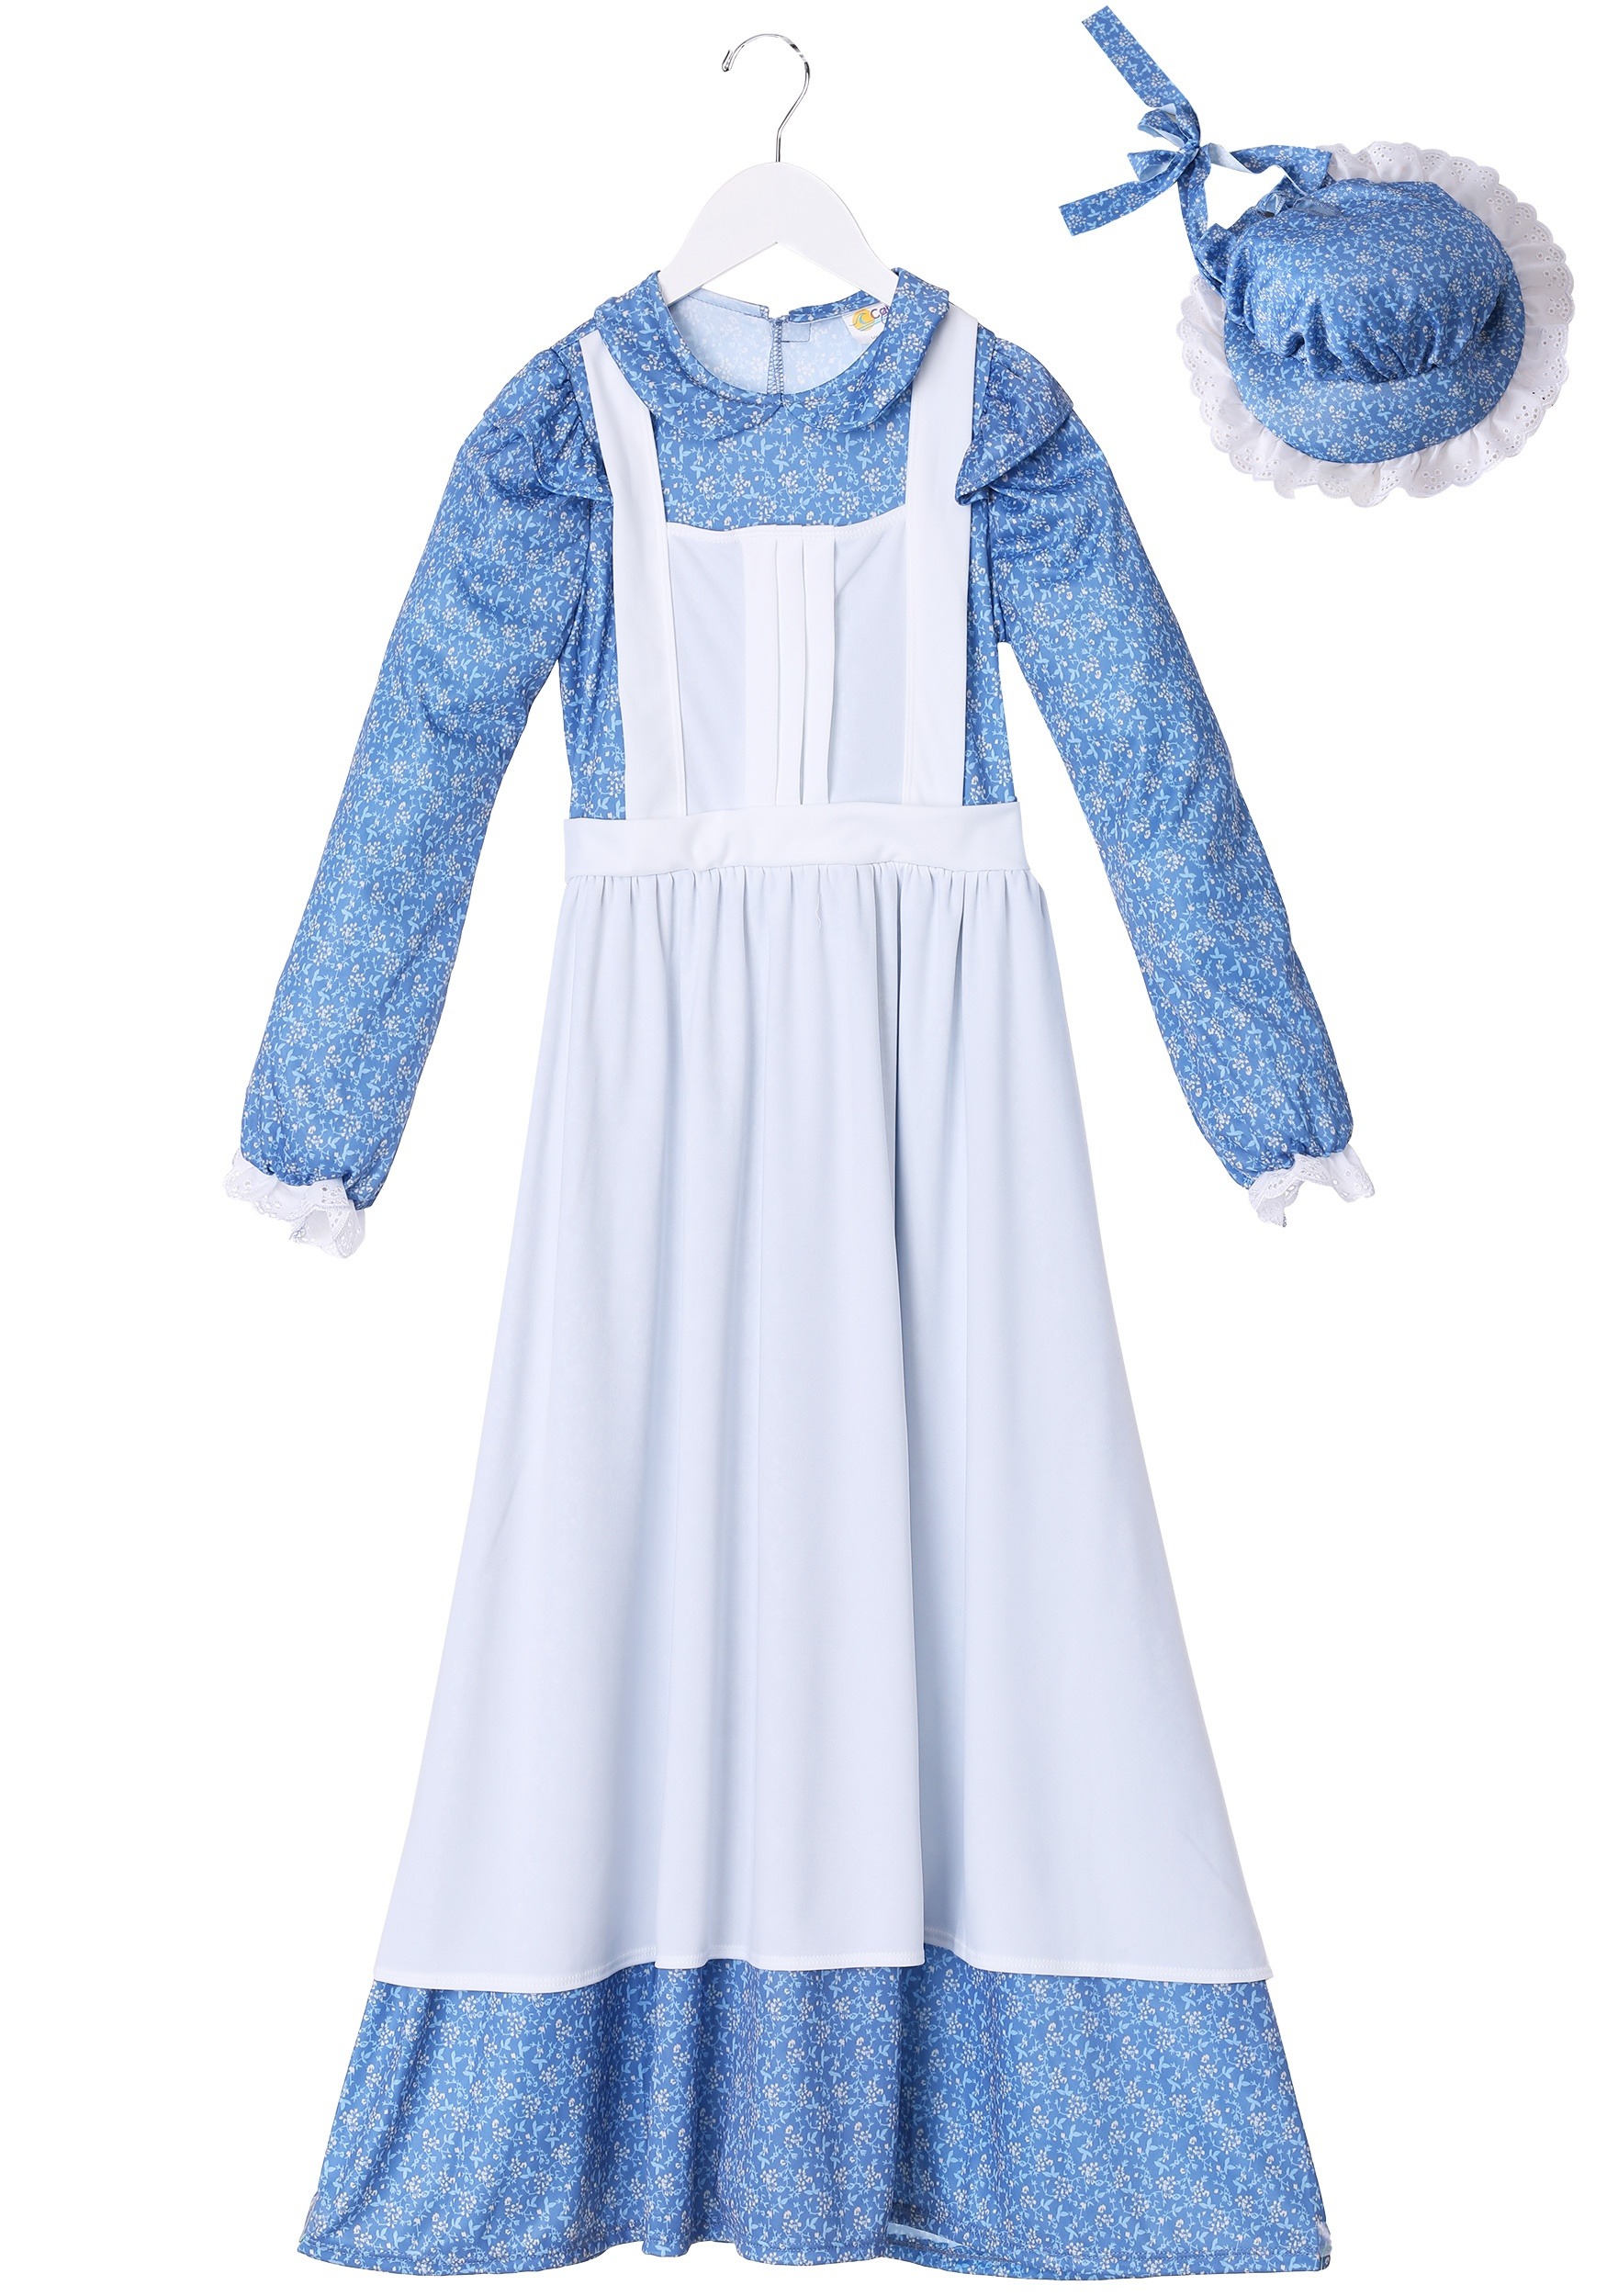 Child Pioneer Girl Costume , Historical Costume